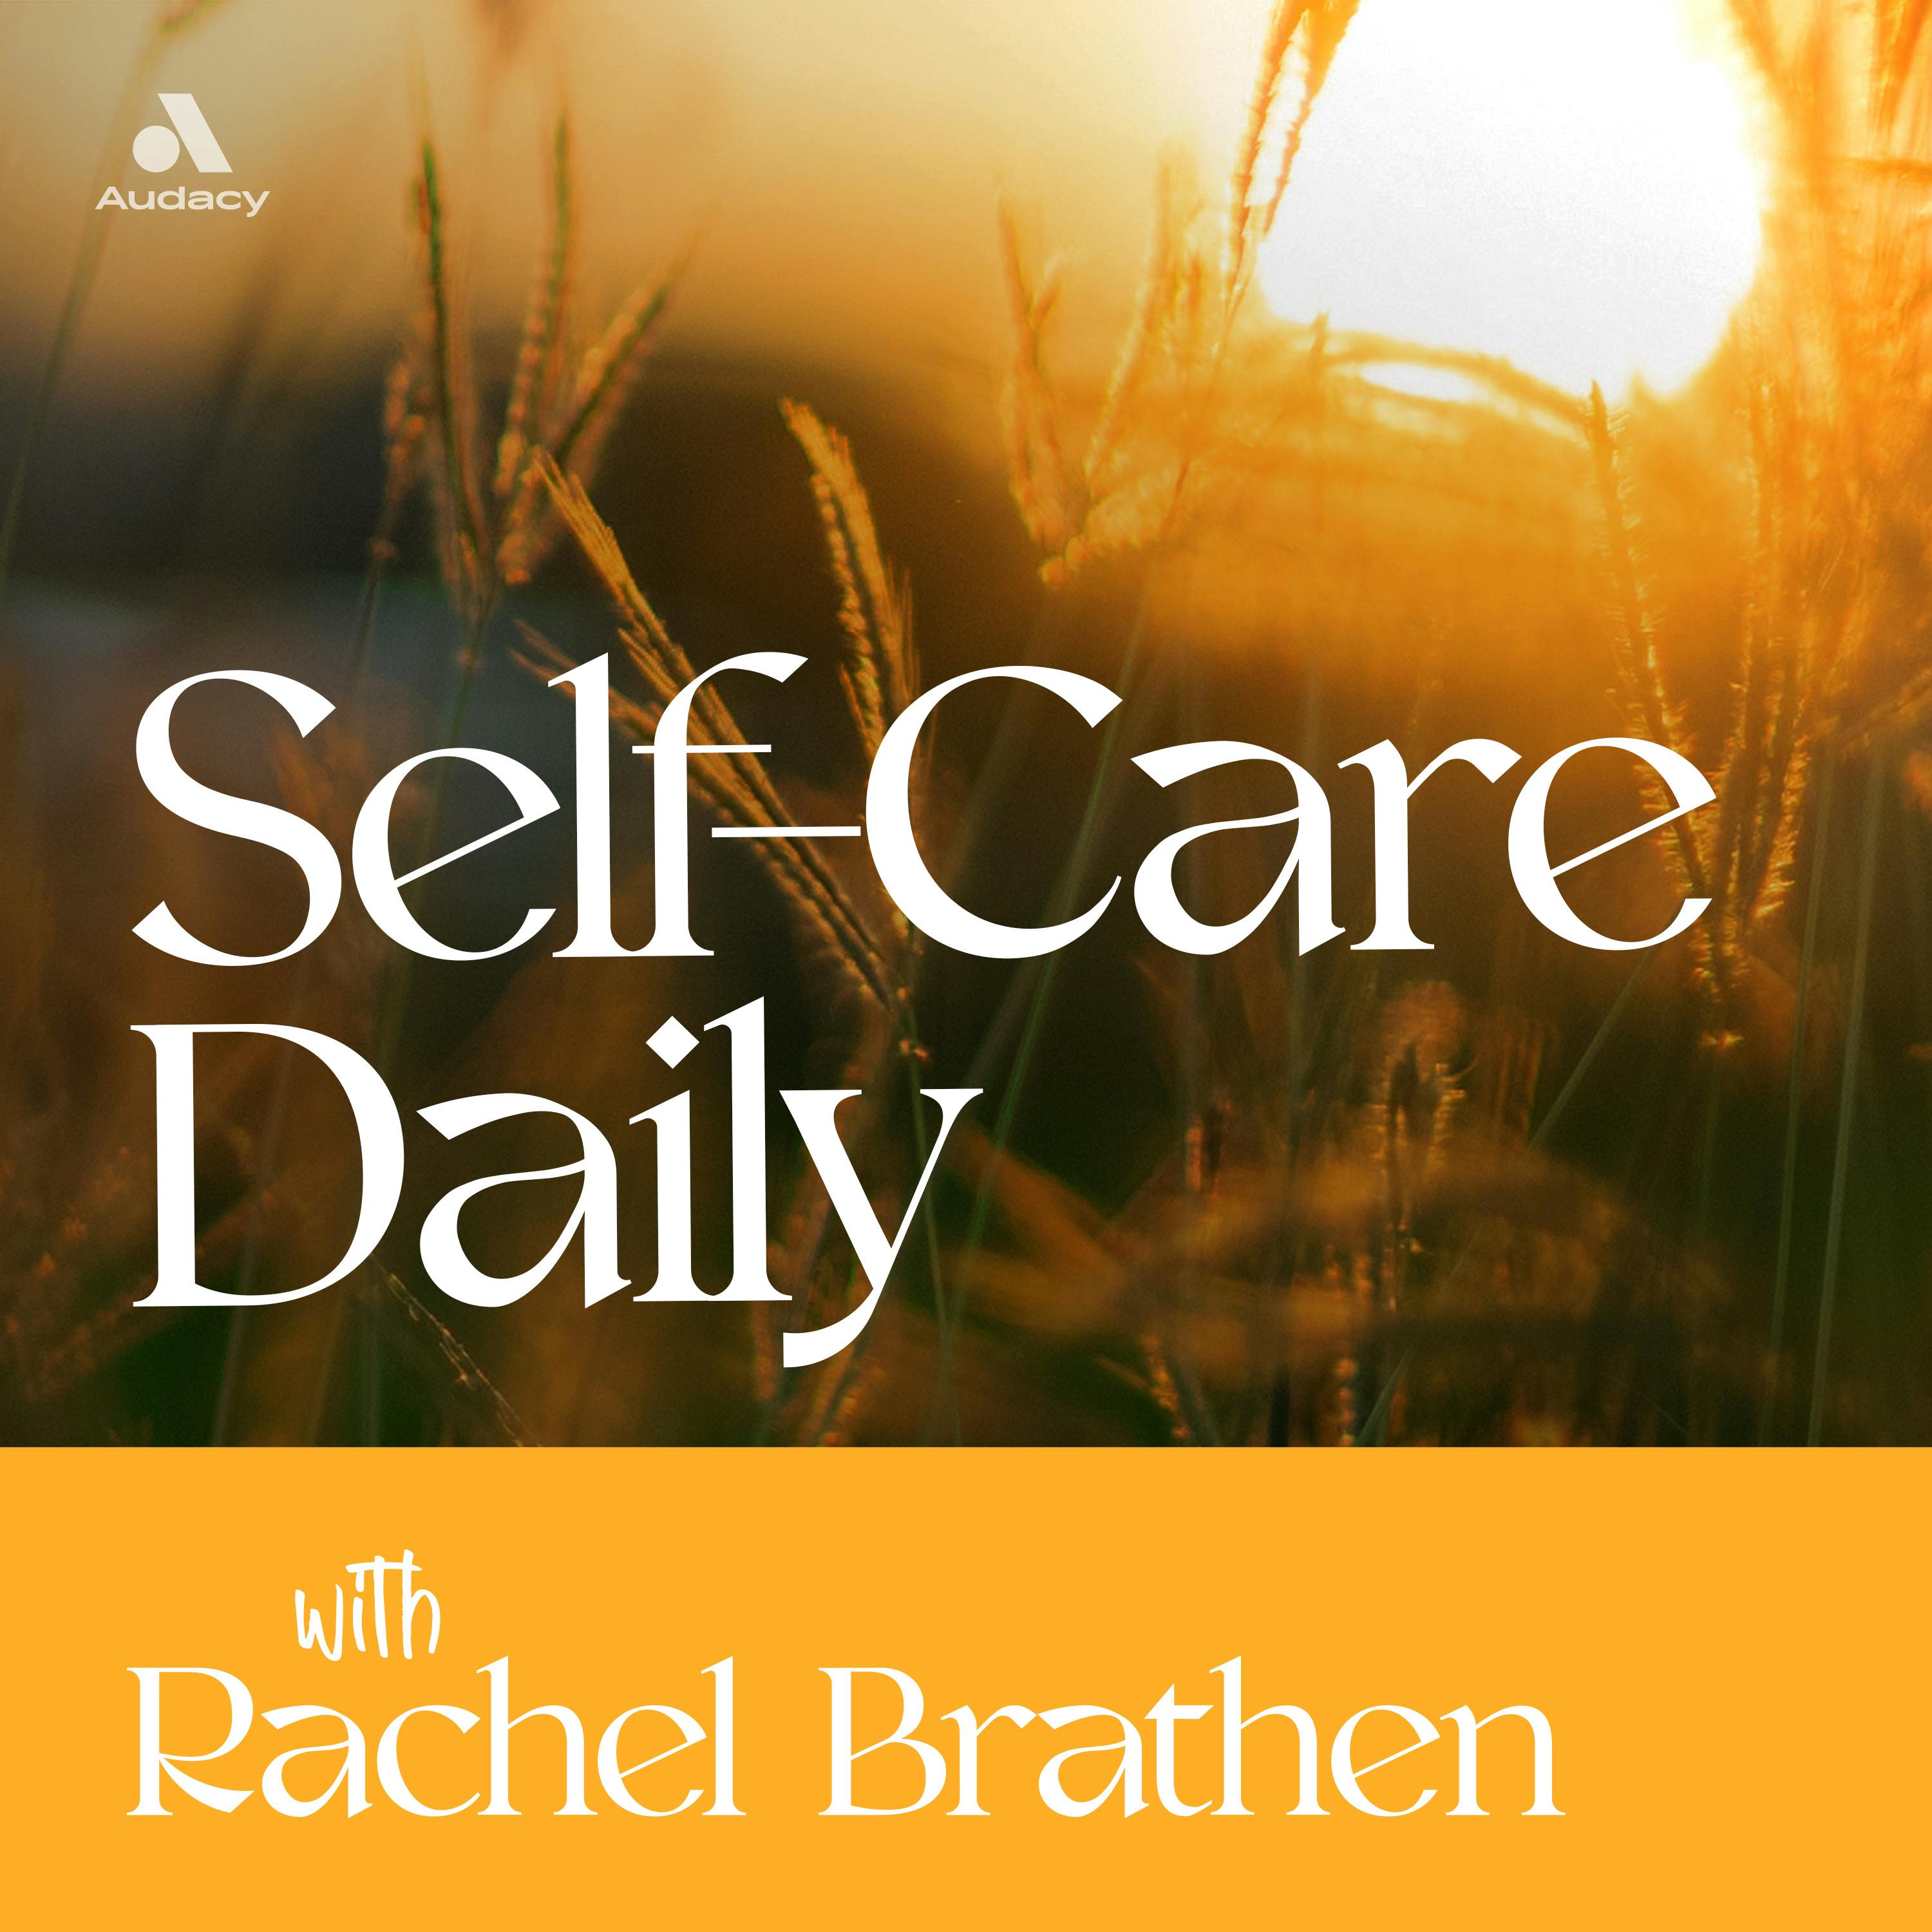 Self-Care Daily with Rachel Brathen